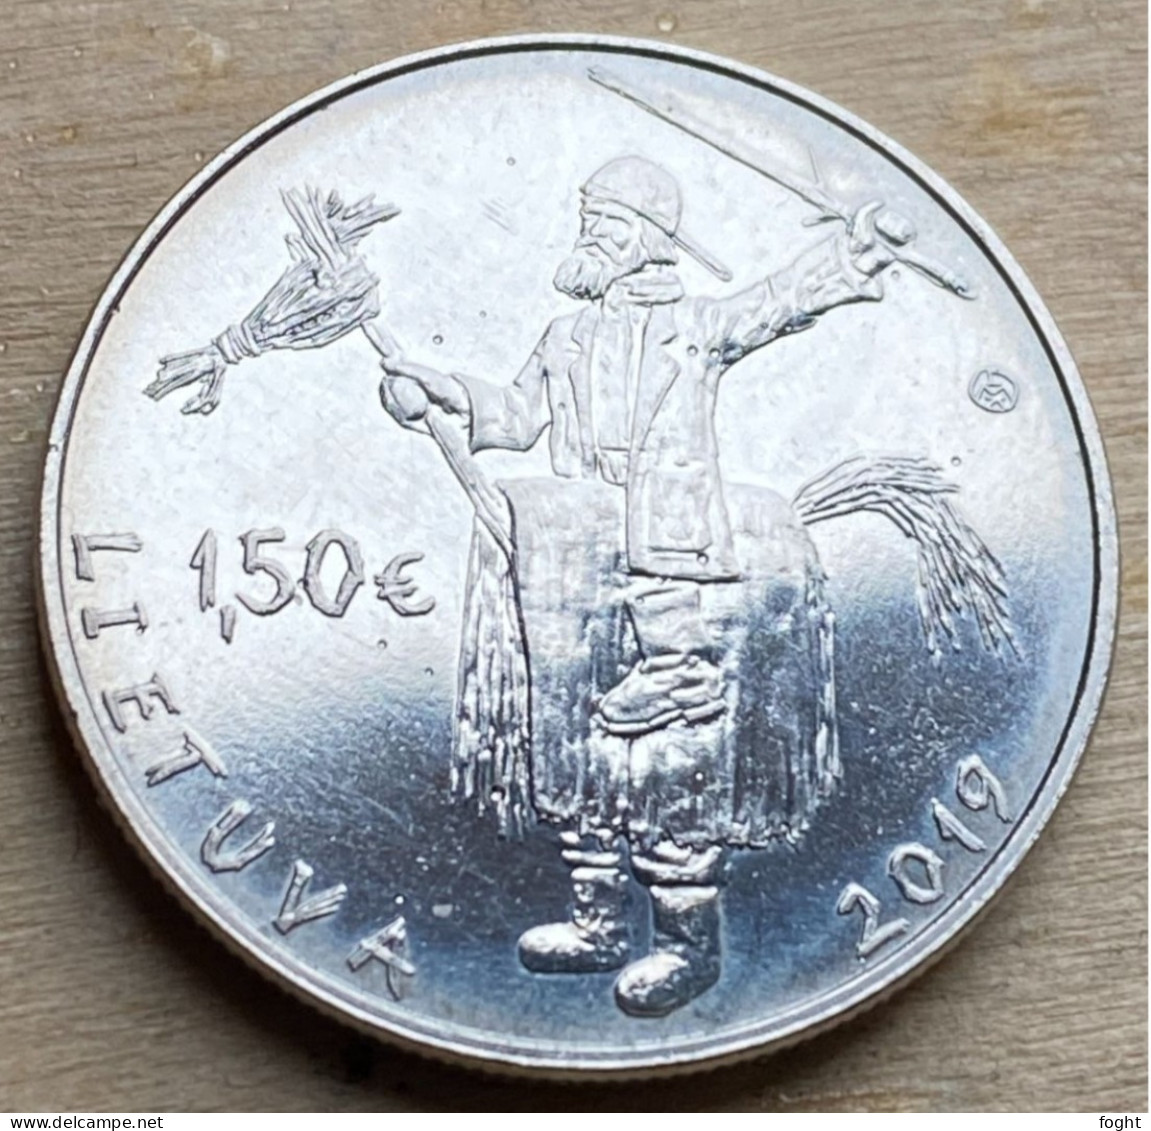 2019 LMK Lithuania "Traditional Lithuanian Celebrations" 1.5 Euro Coin,KM#234,7119 - Litouwen